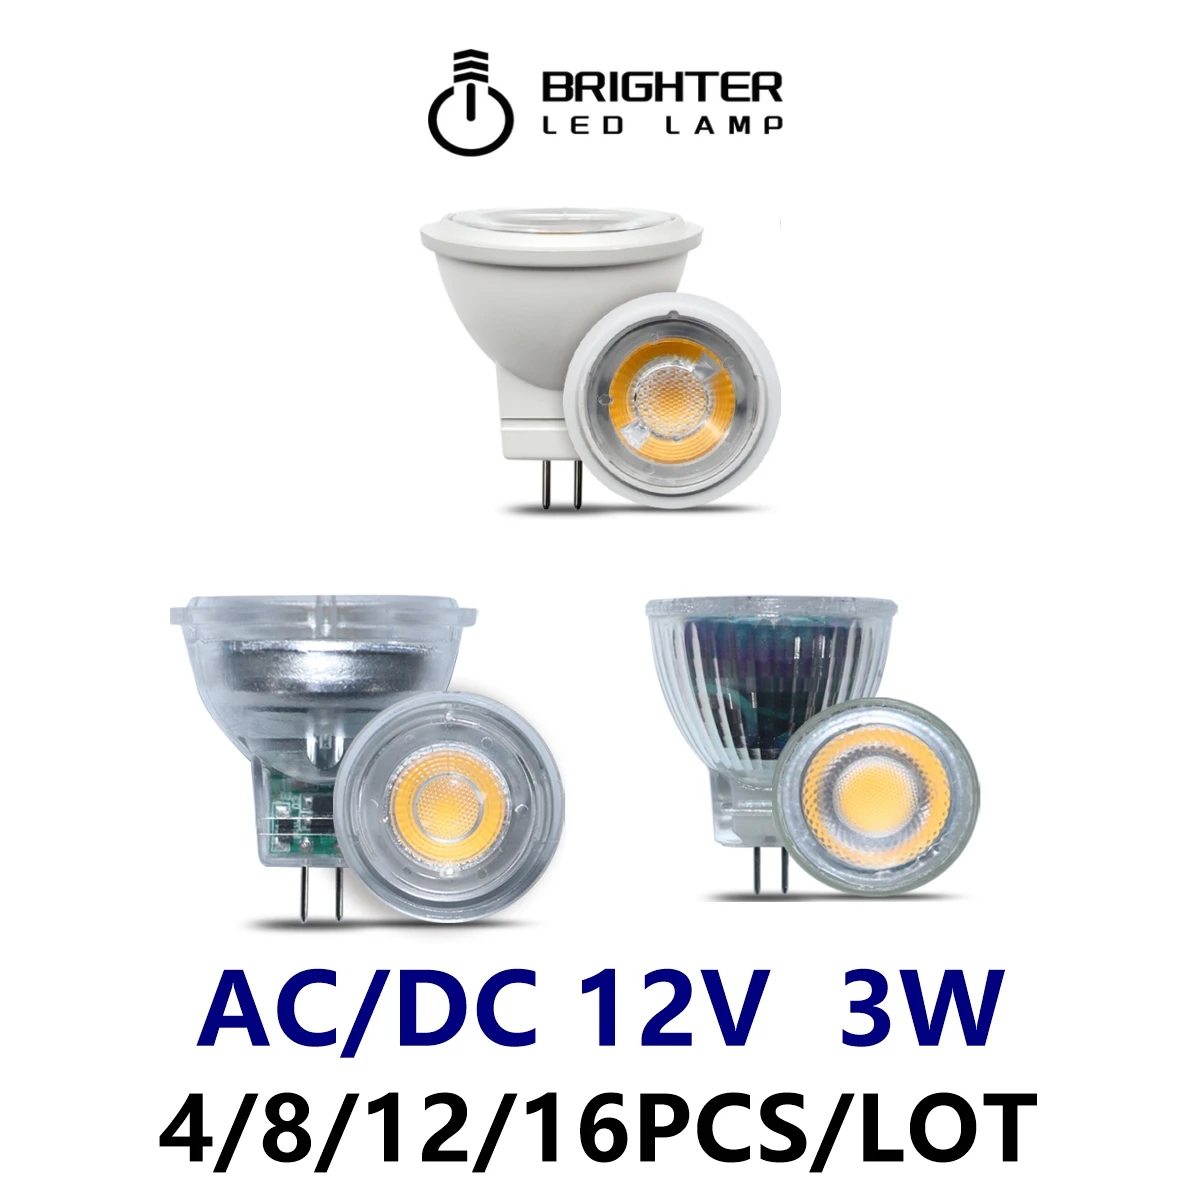 

4-20PCS LED Mini spotlight MR11 GU4.0 Low voltage AC/DC 12V 3W 3000K/4000K/6000K super light suitable for kitchen and study